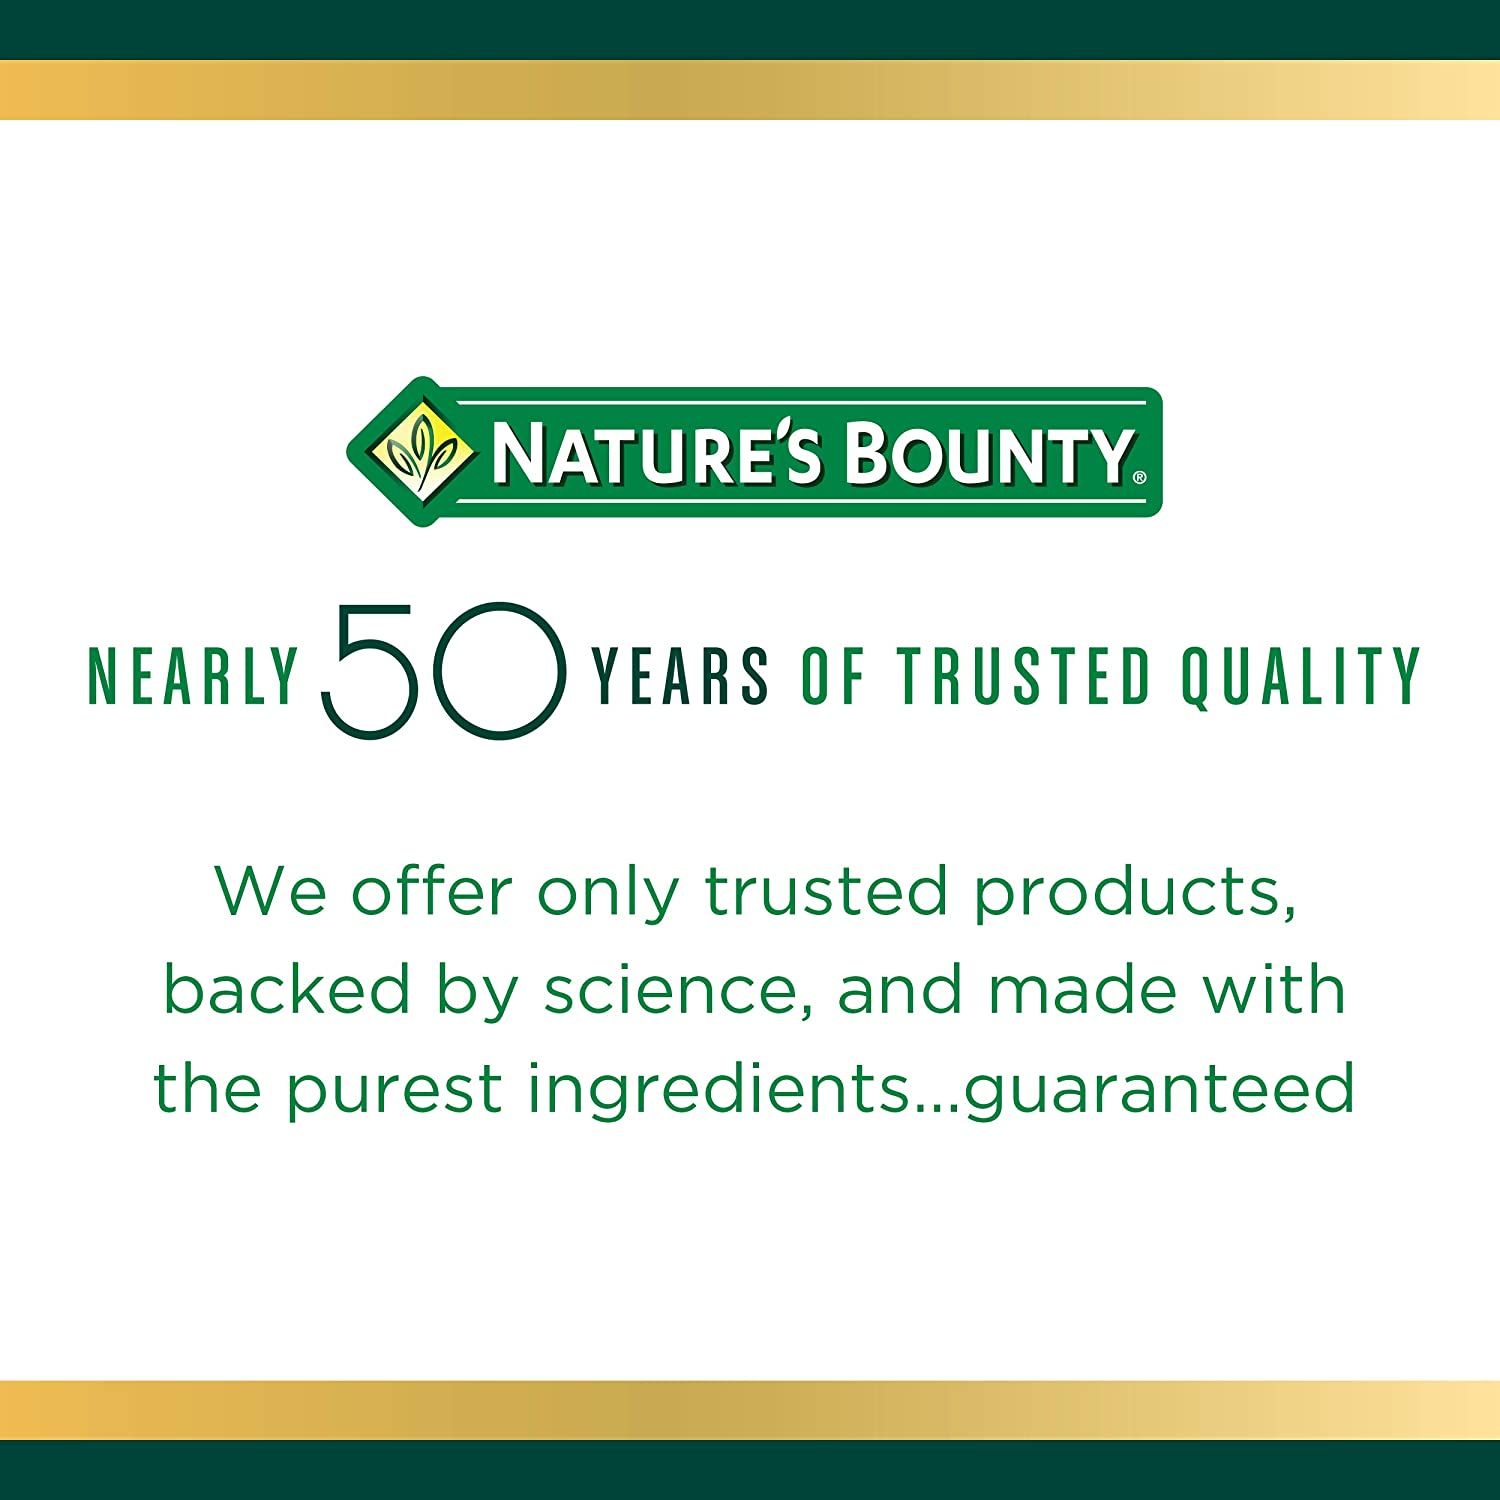 Nature's Bounty Flush Free Niacin 500 mg Capsules - 120 ct